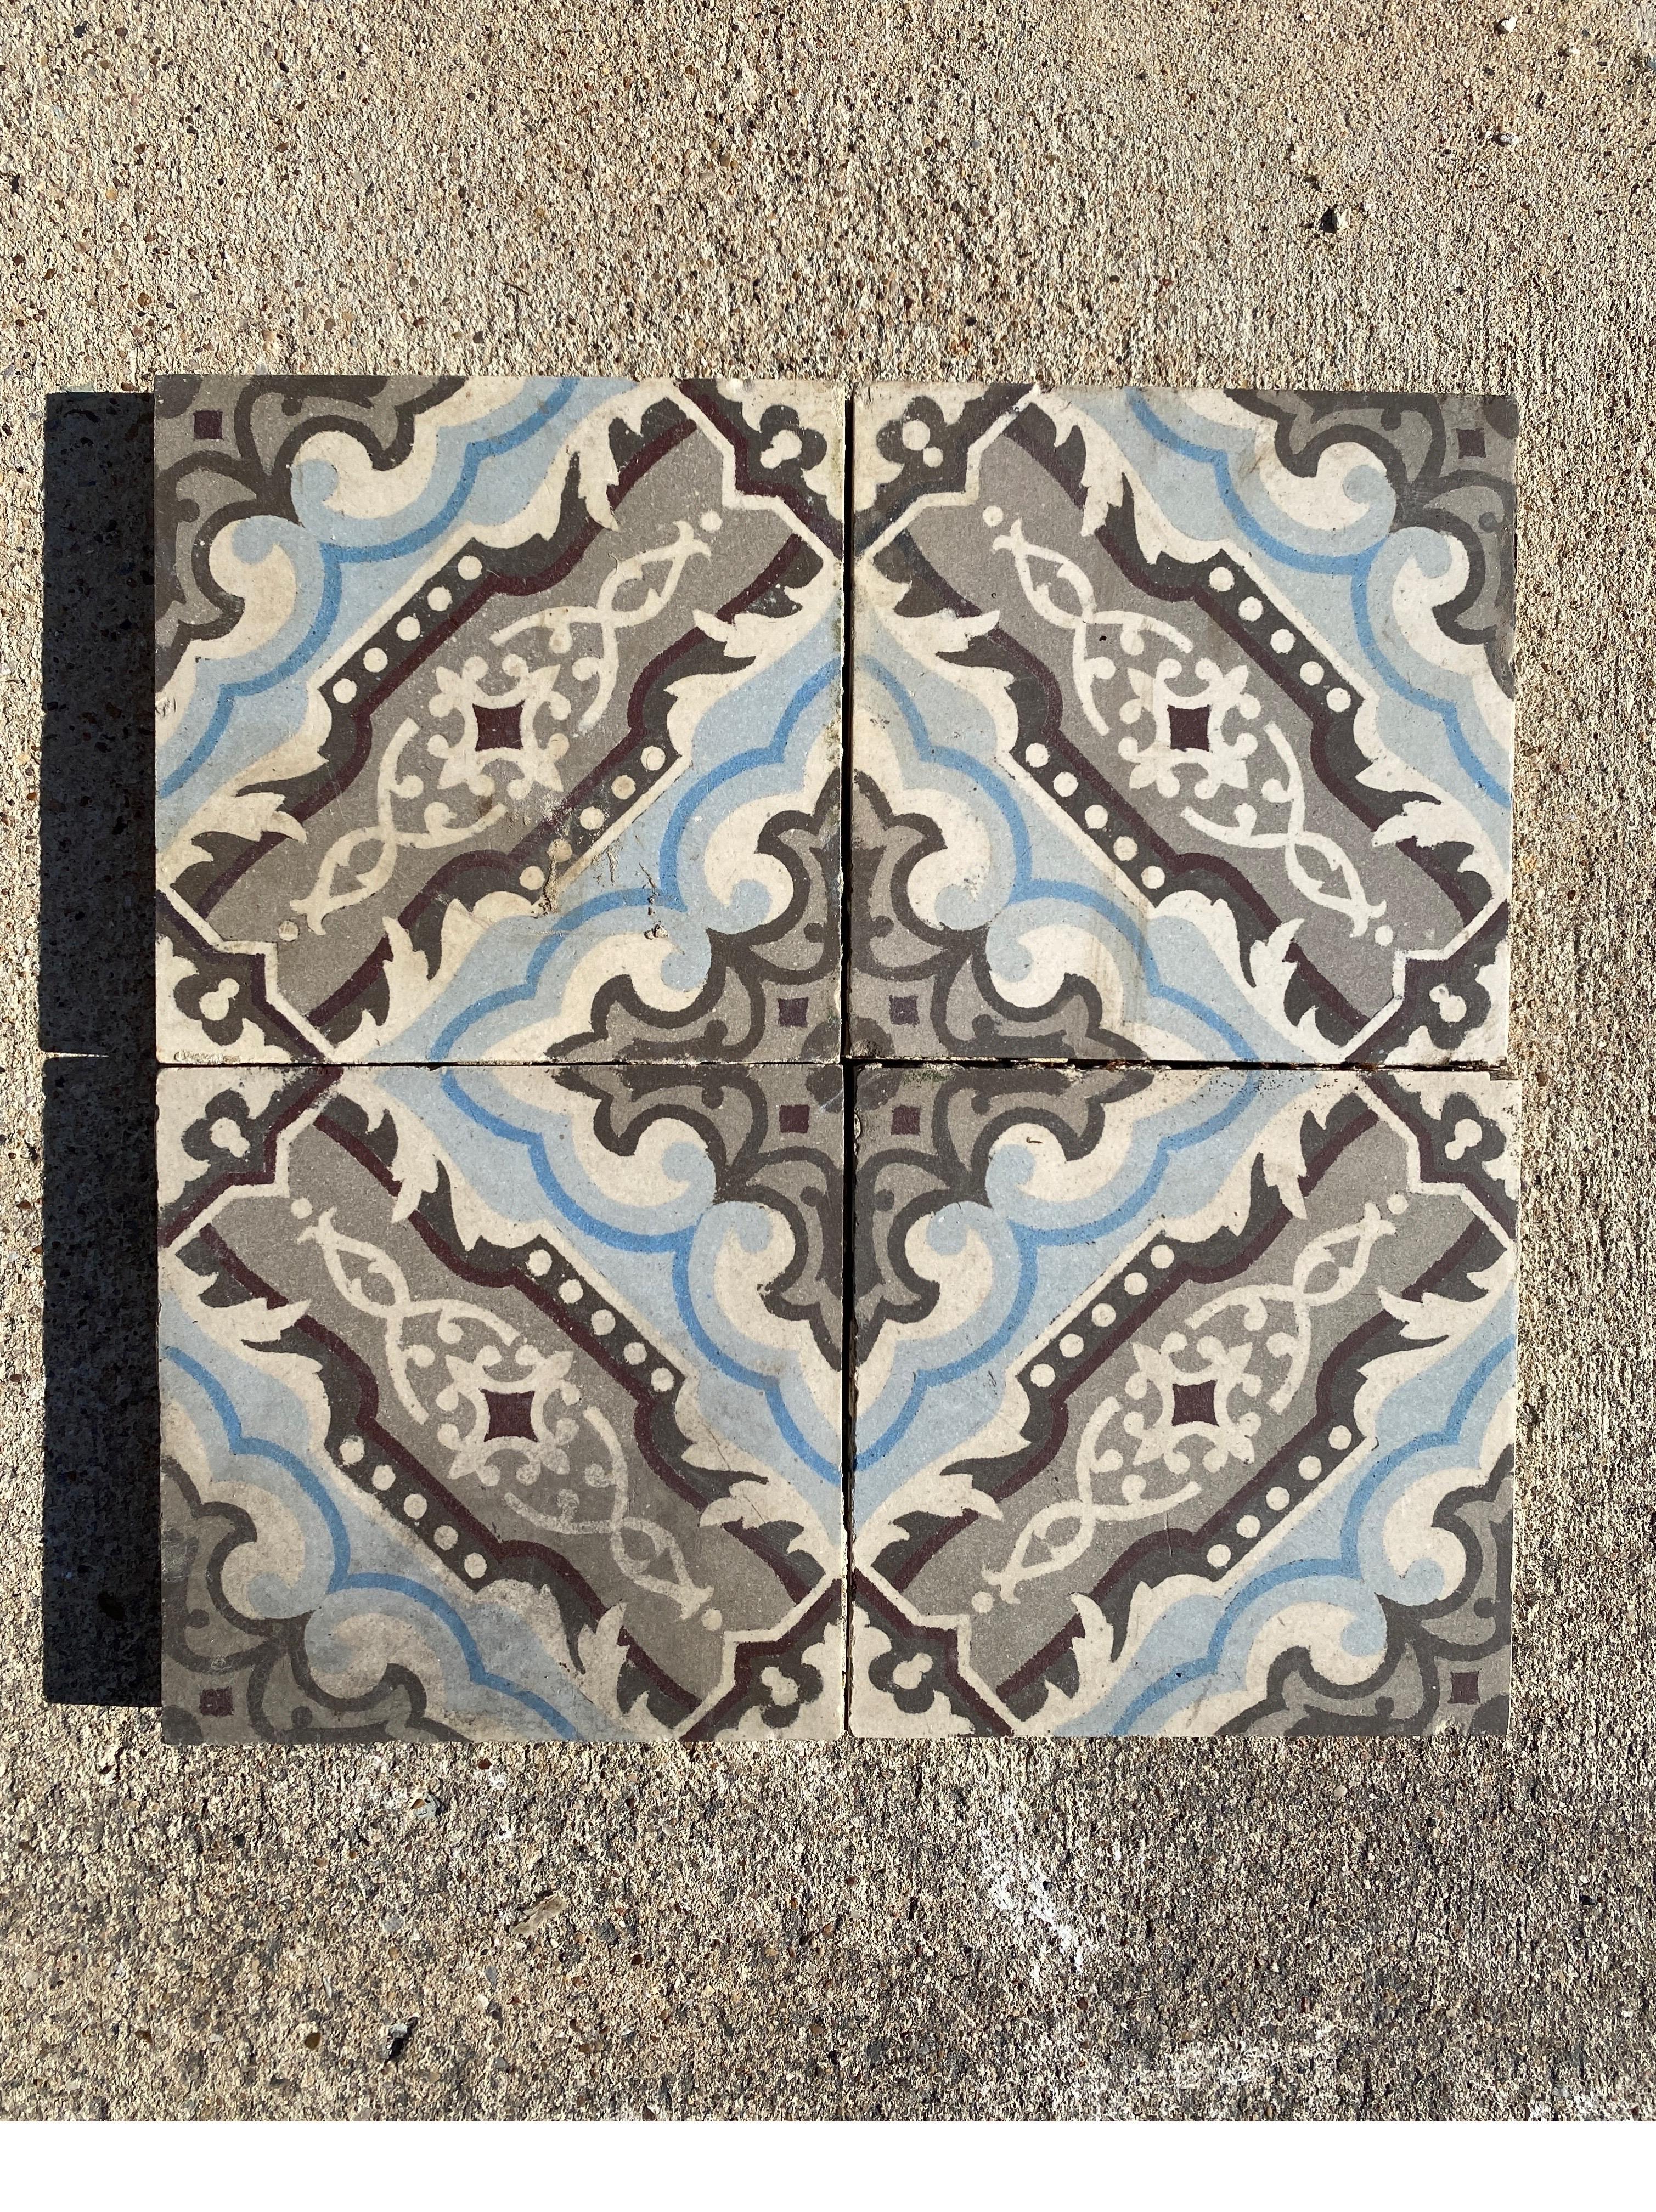 Beautiful blue and grey encaustic tiles.

Long borders are 2.75